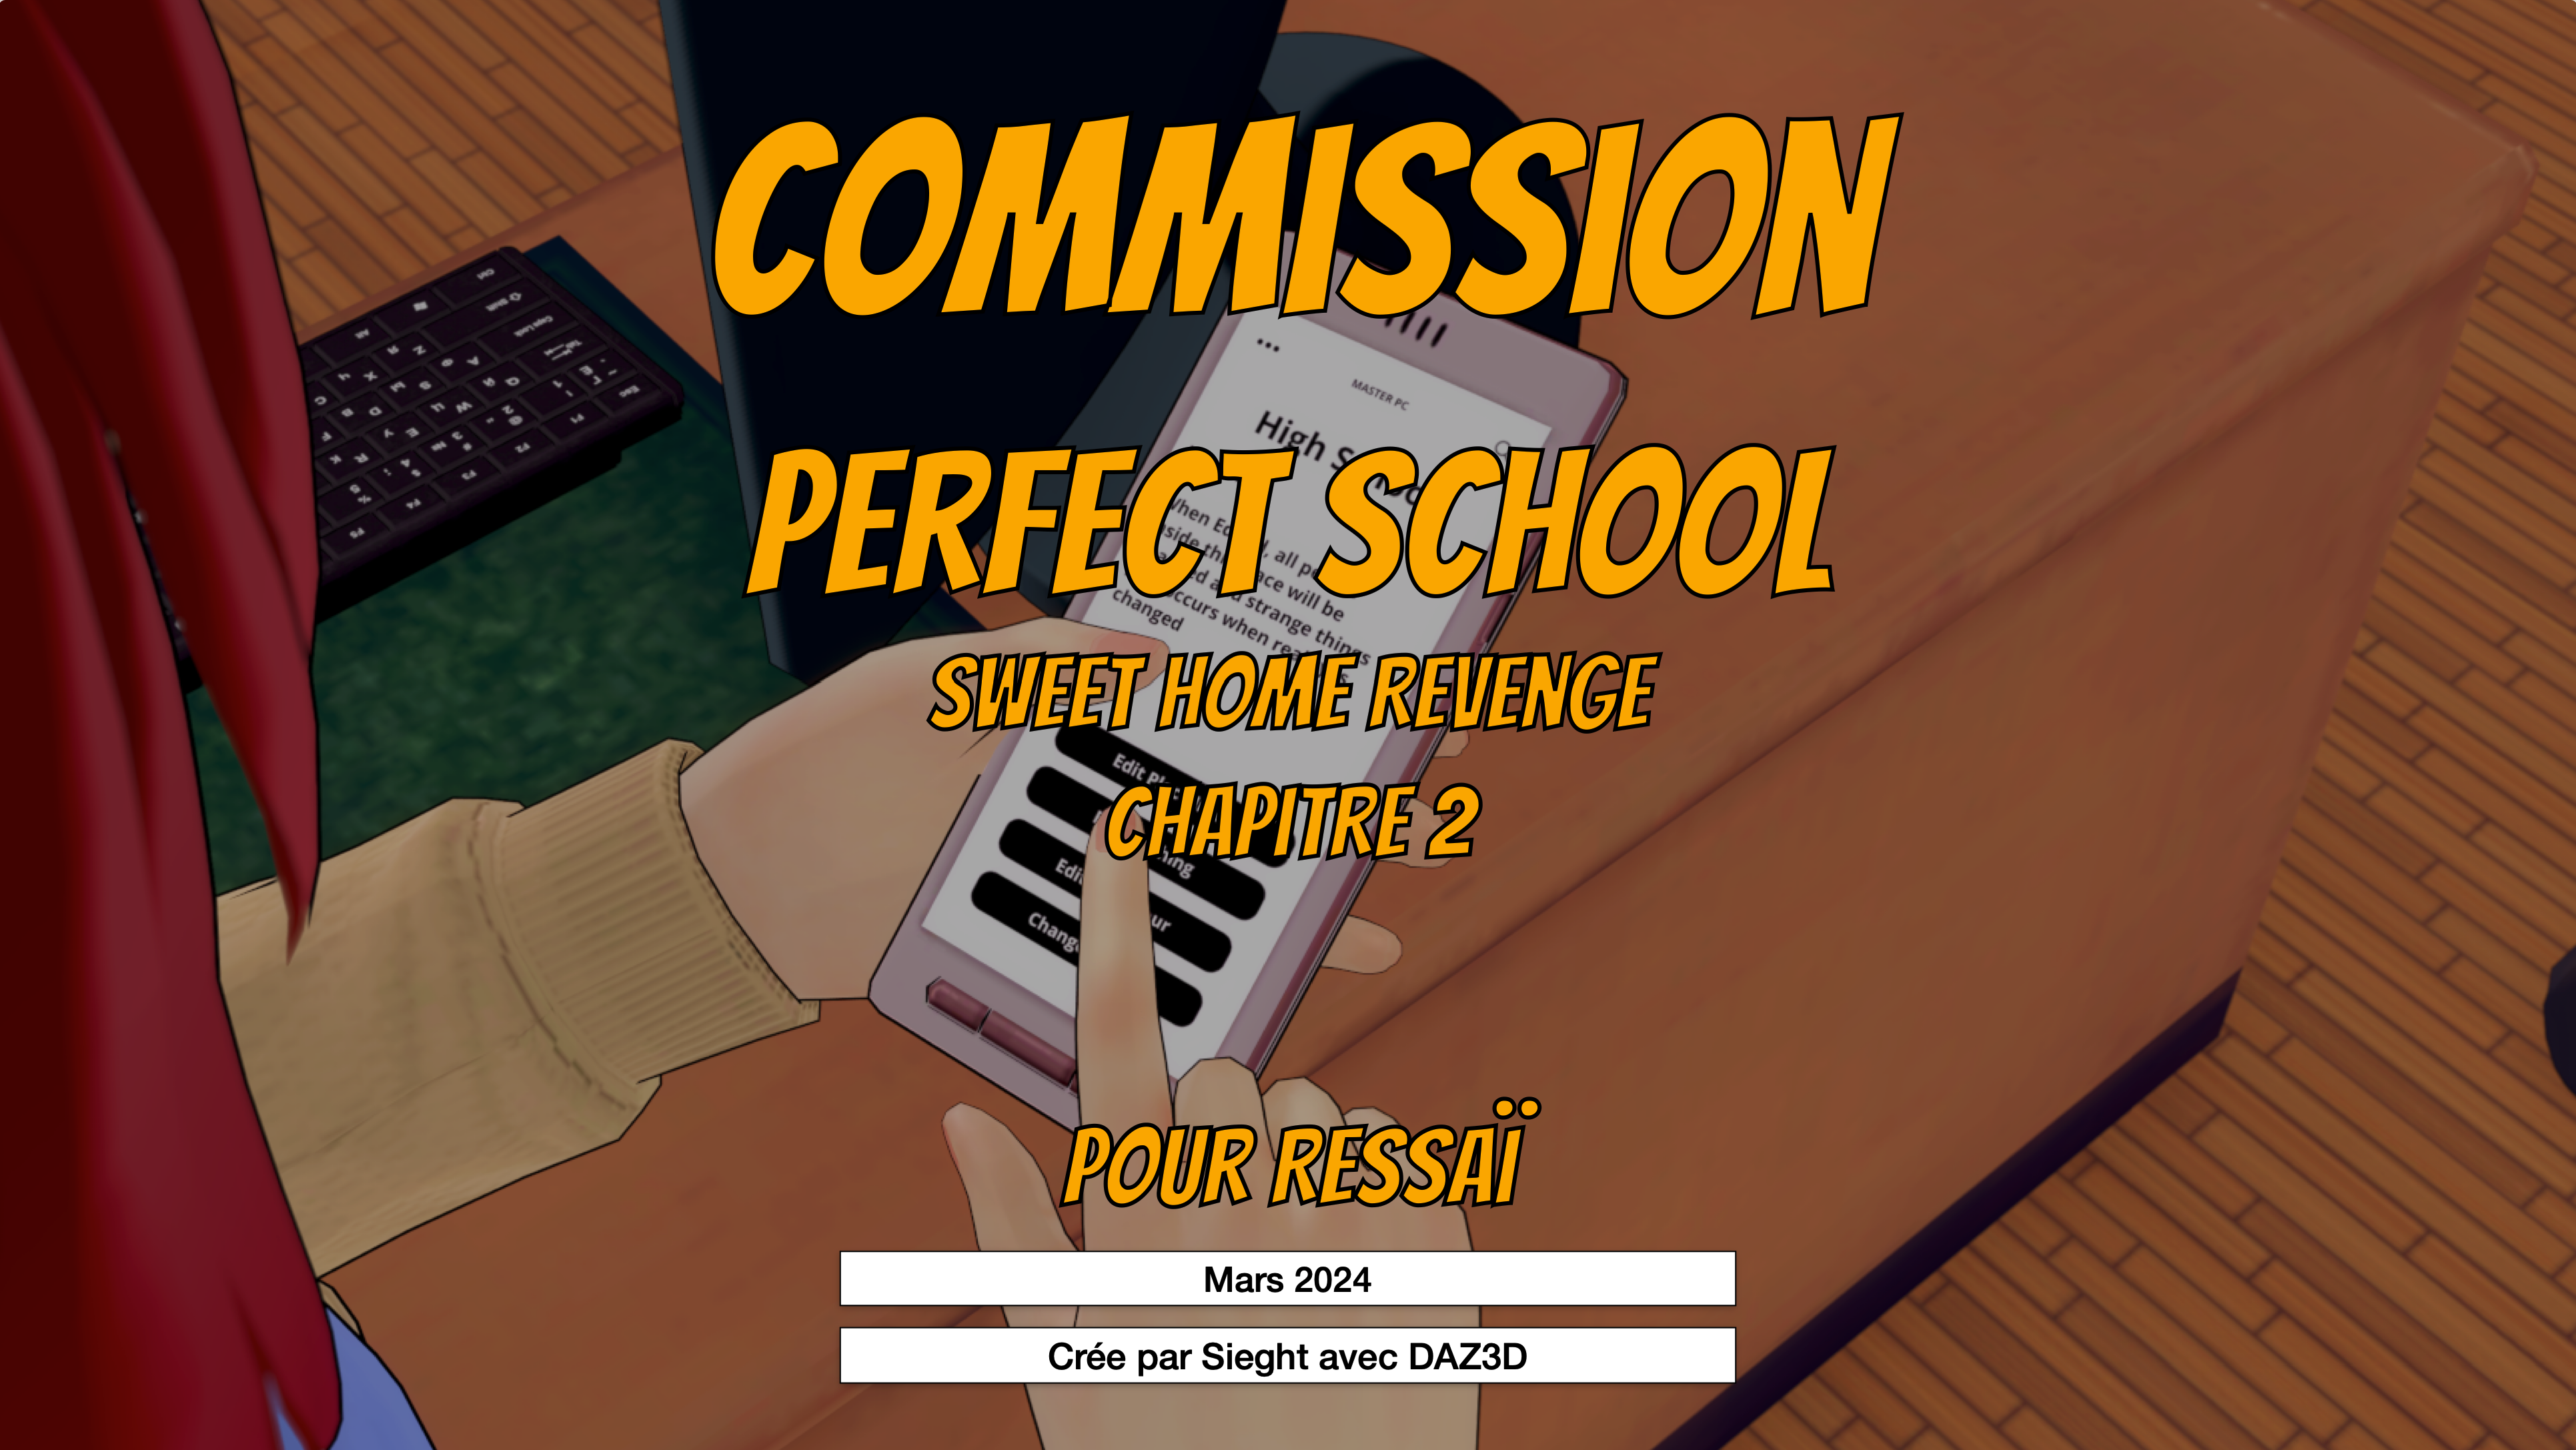 Perfect School – (Sweet Home Revenge Chapitre 2)